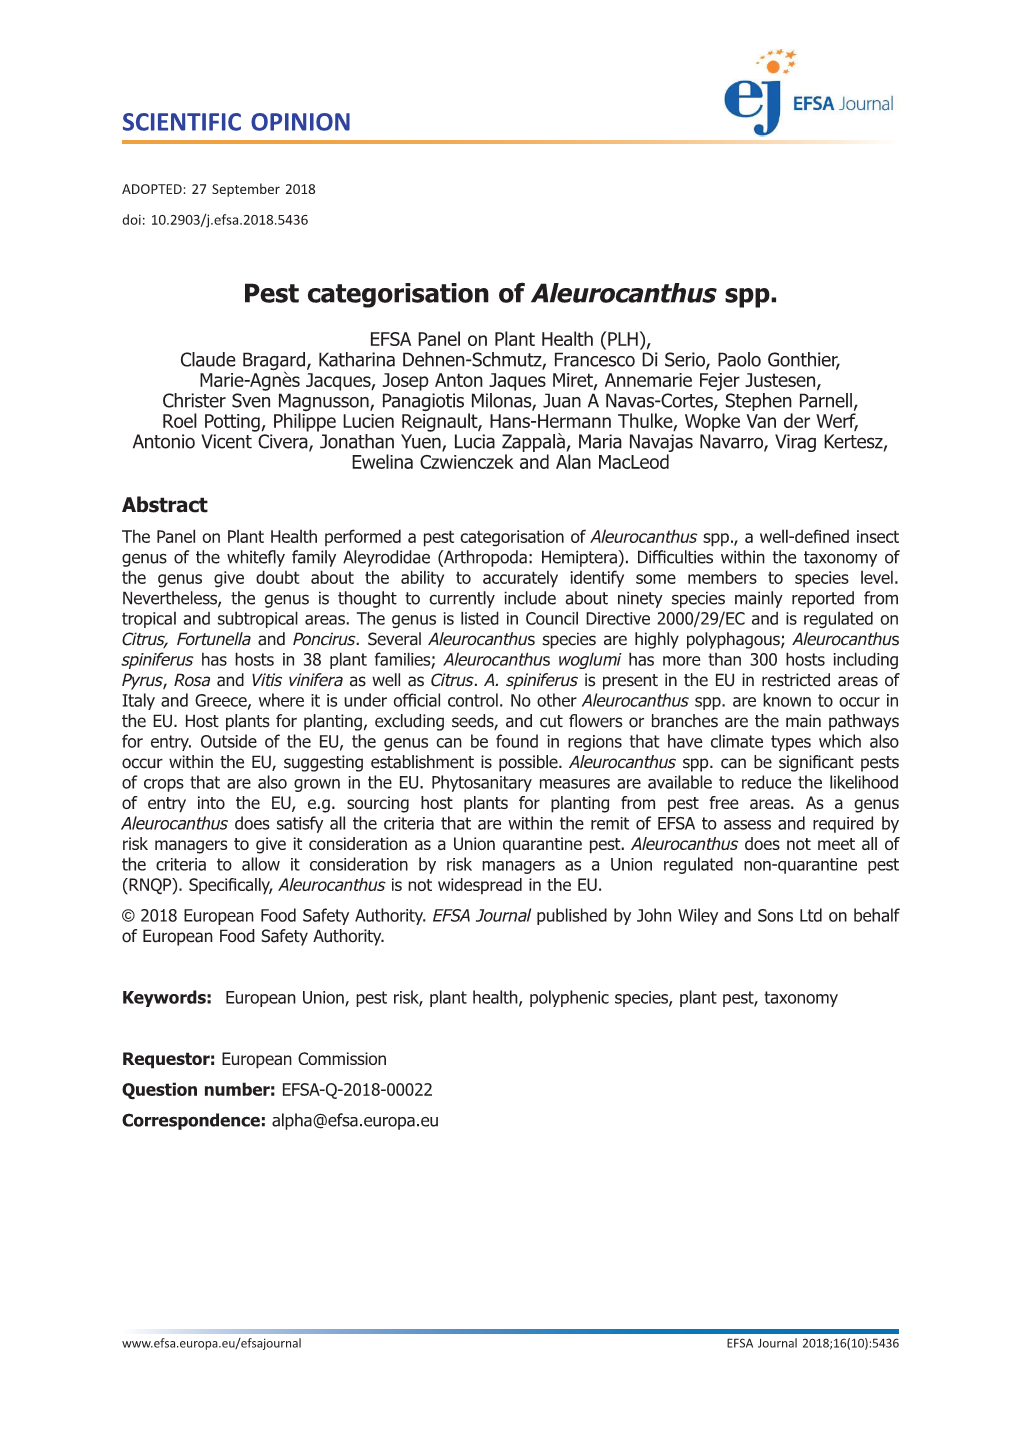 Pest Categorisation of Aleurocanthus Spp